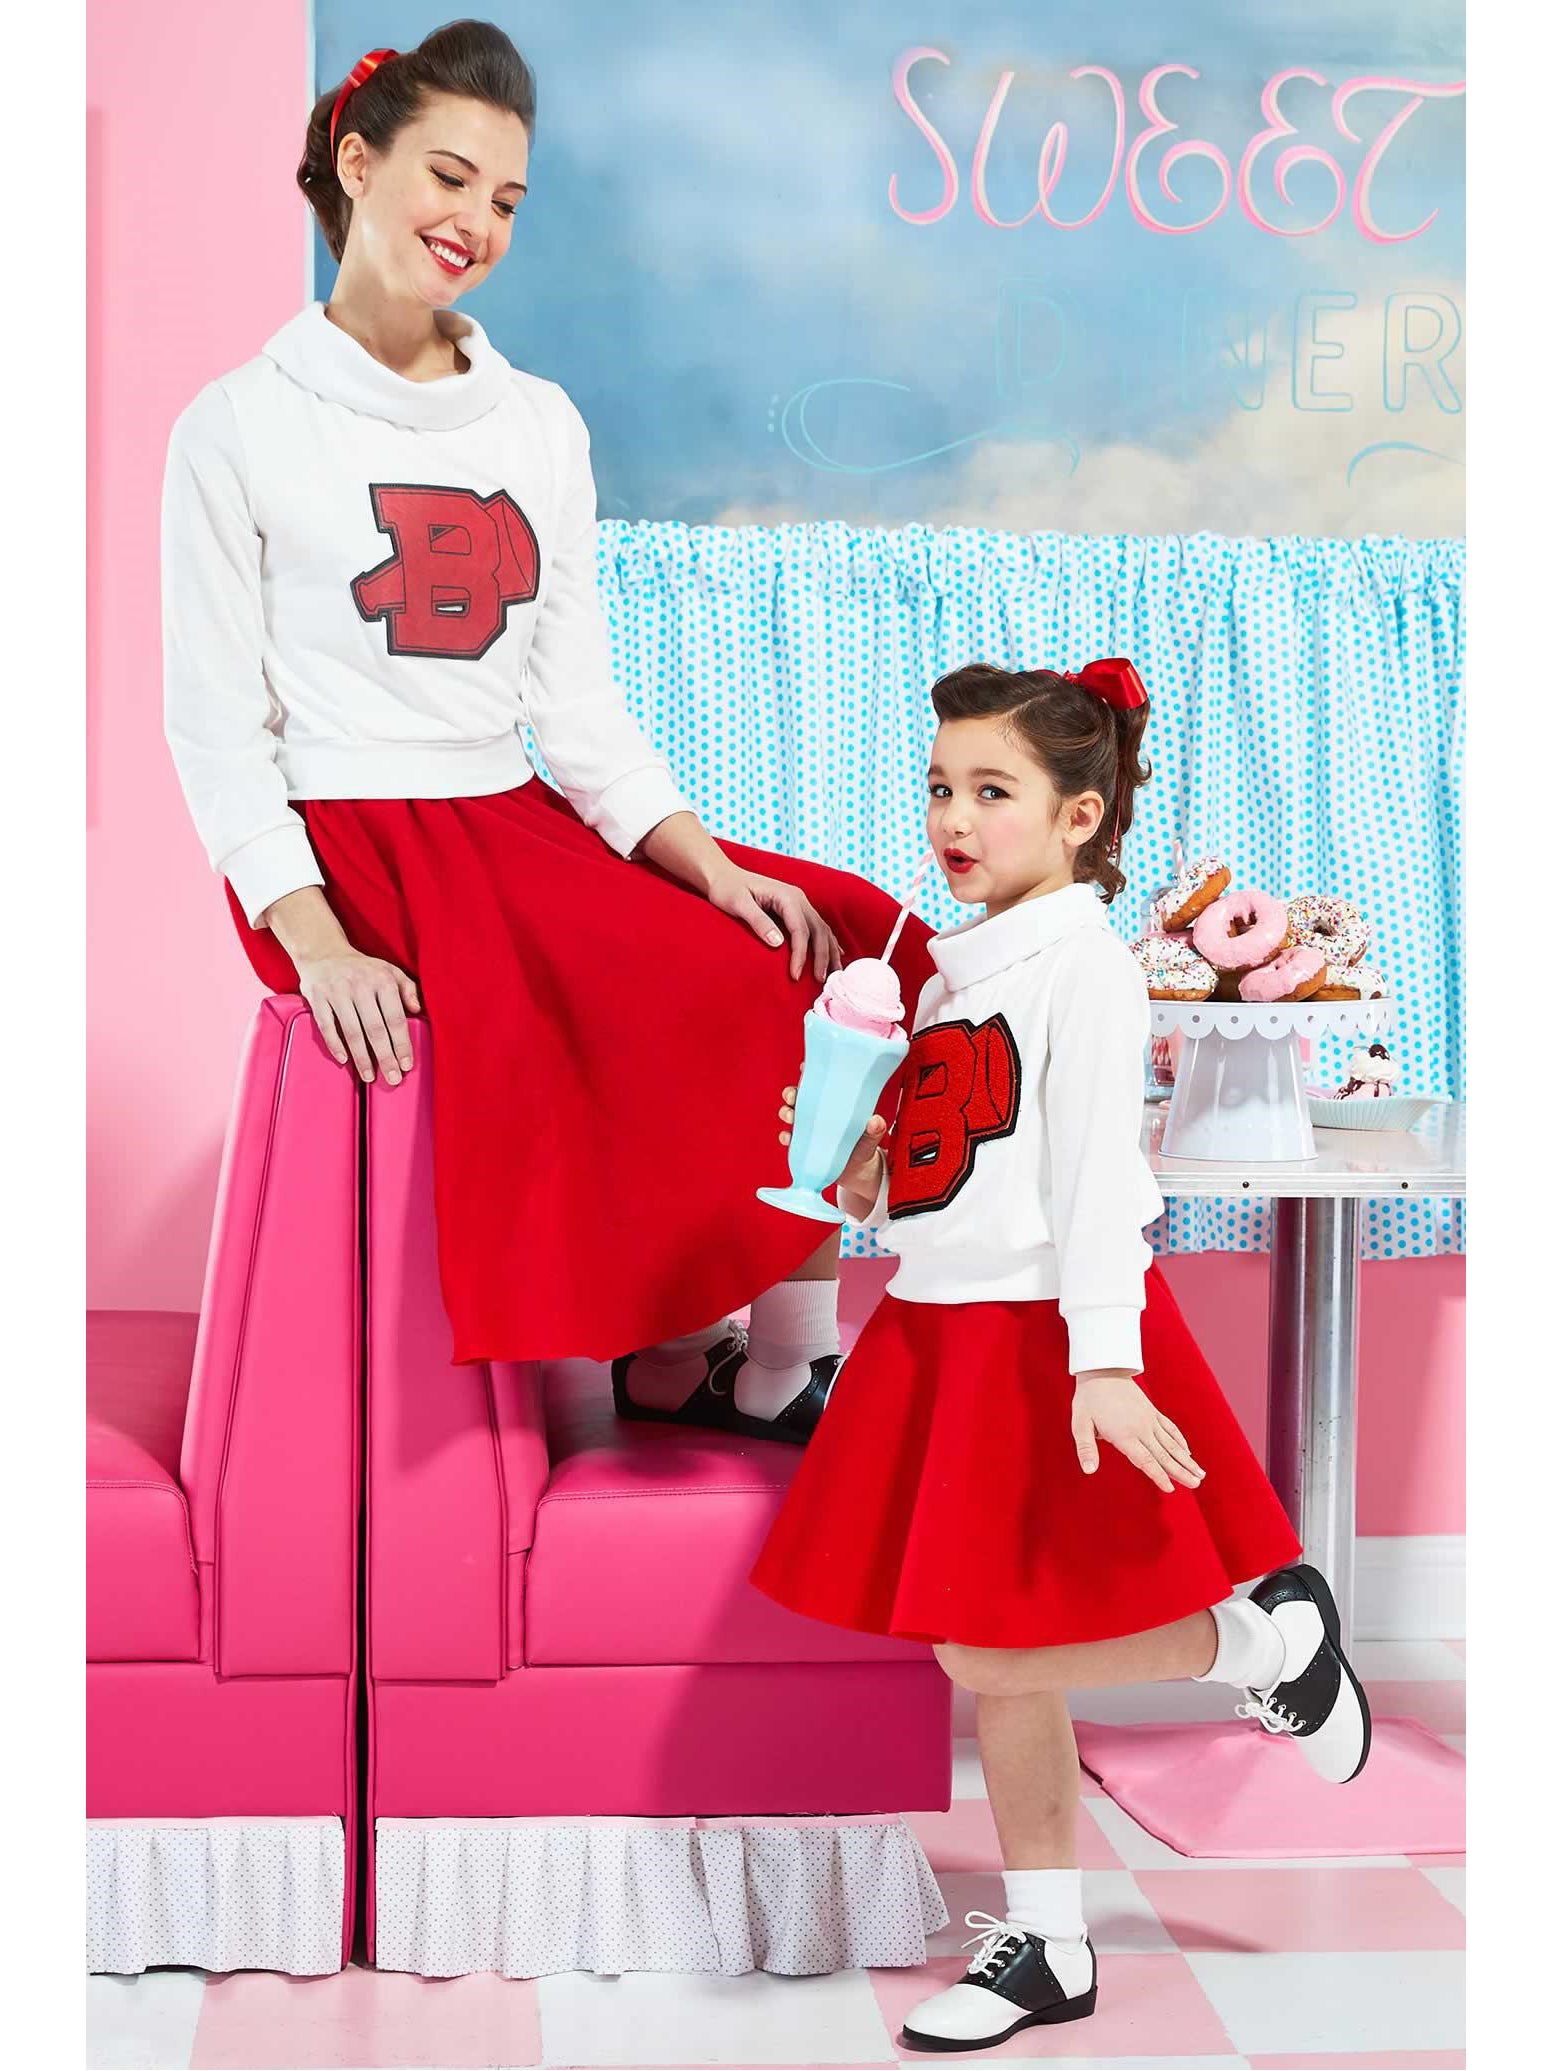 ‘50s Cheerleader Costume for Women  red alt1